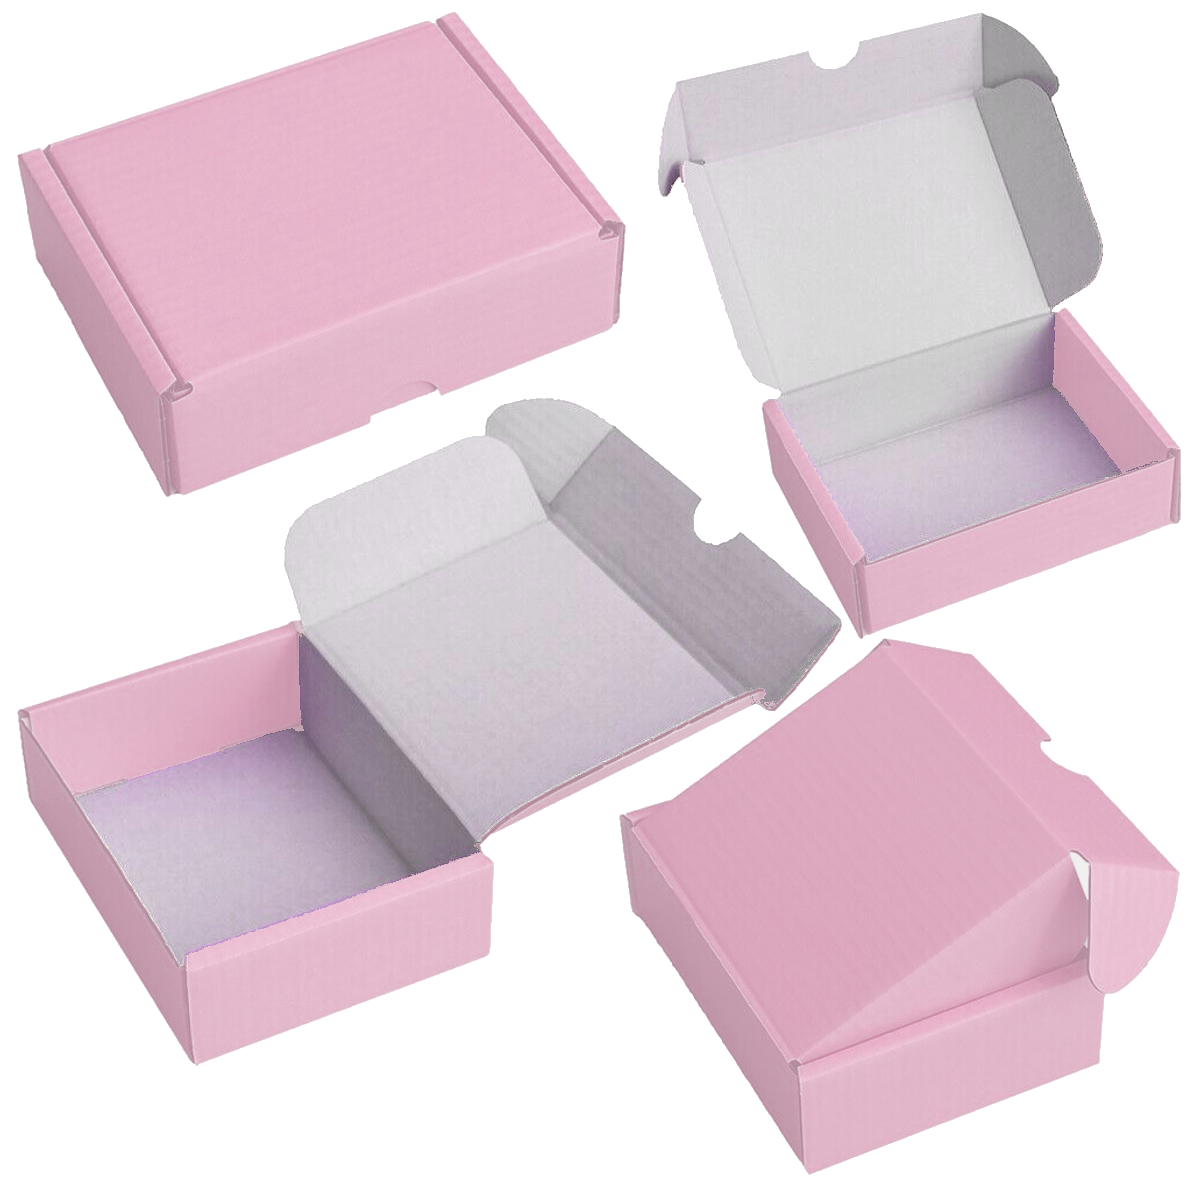 F3 Pink 6 x 6 x 2.5 inch Postal Boxes